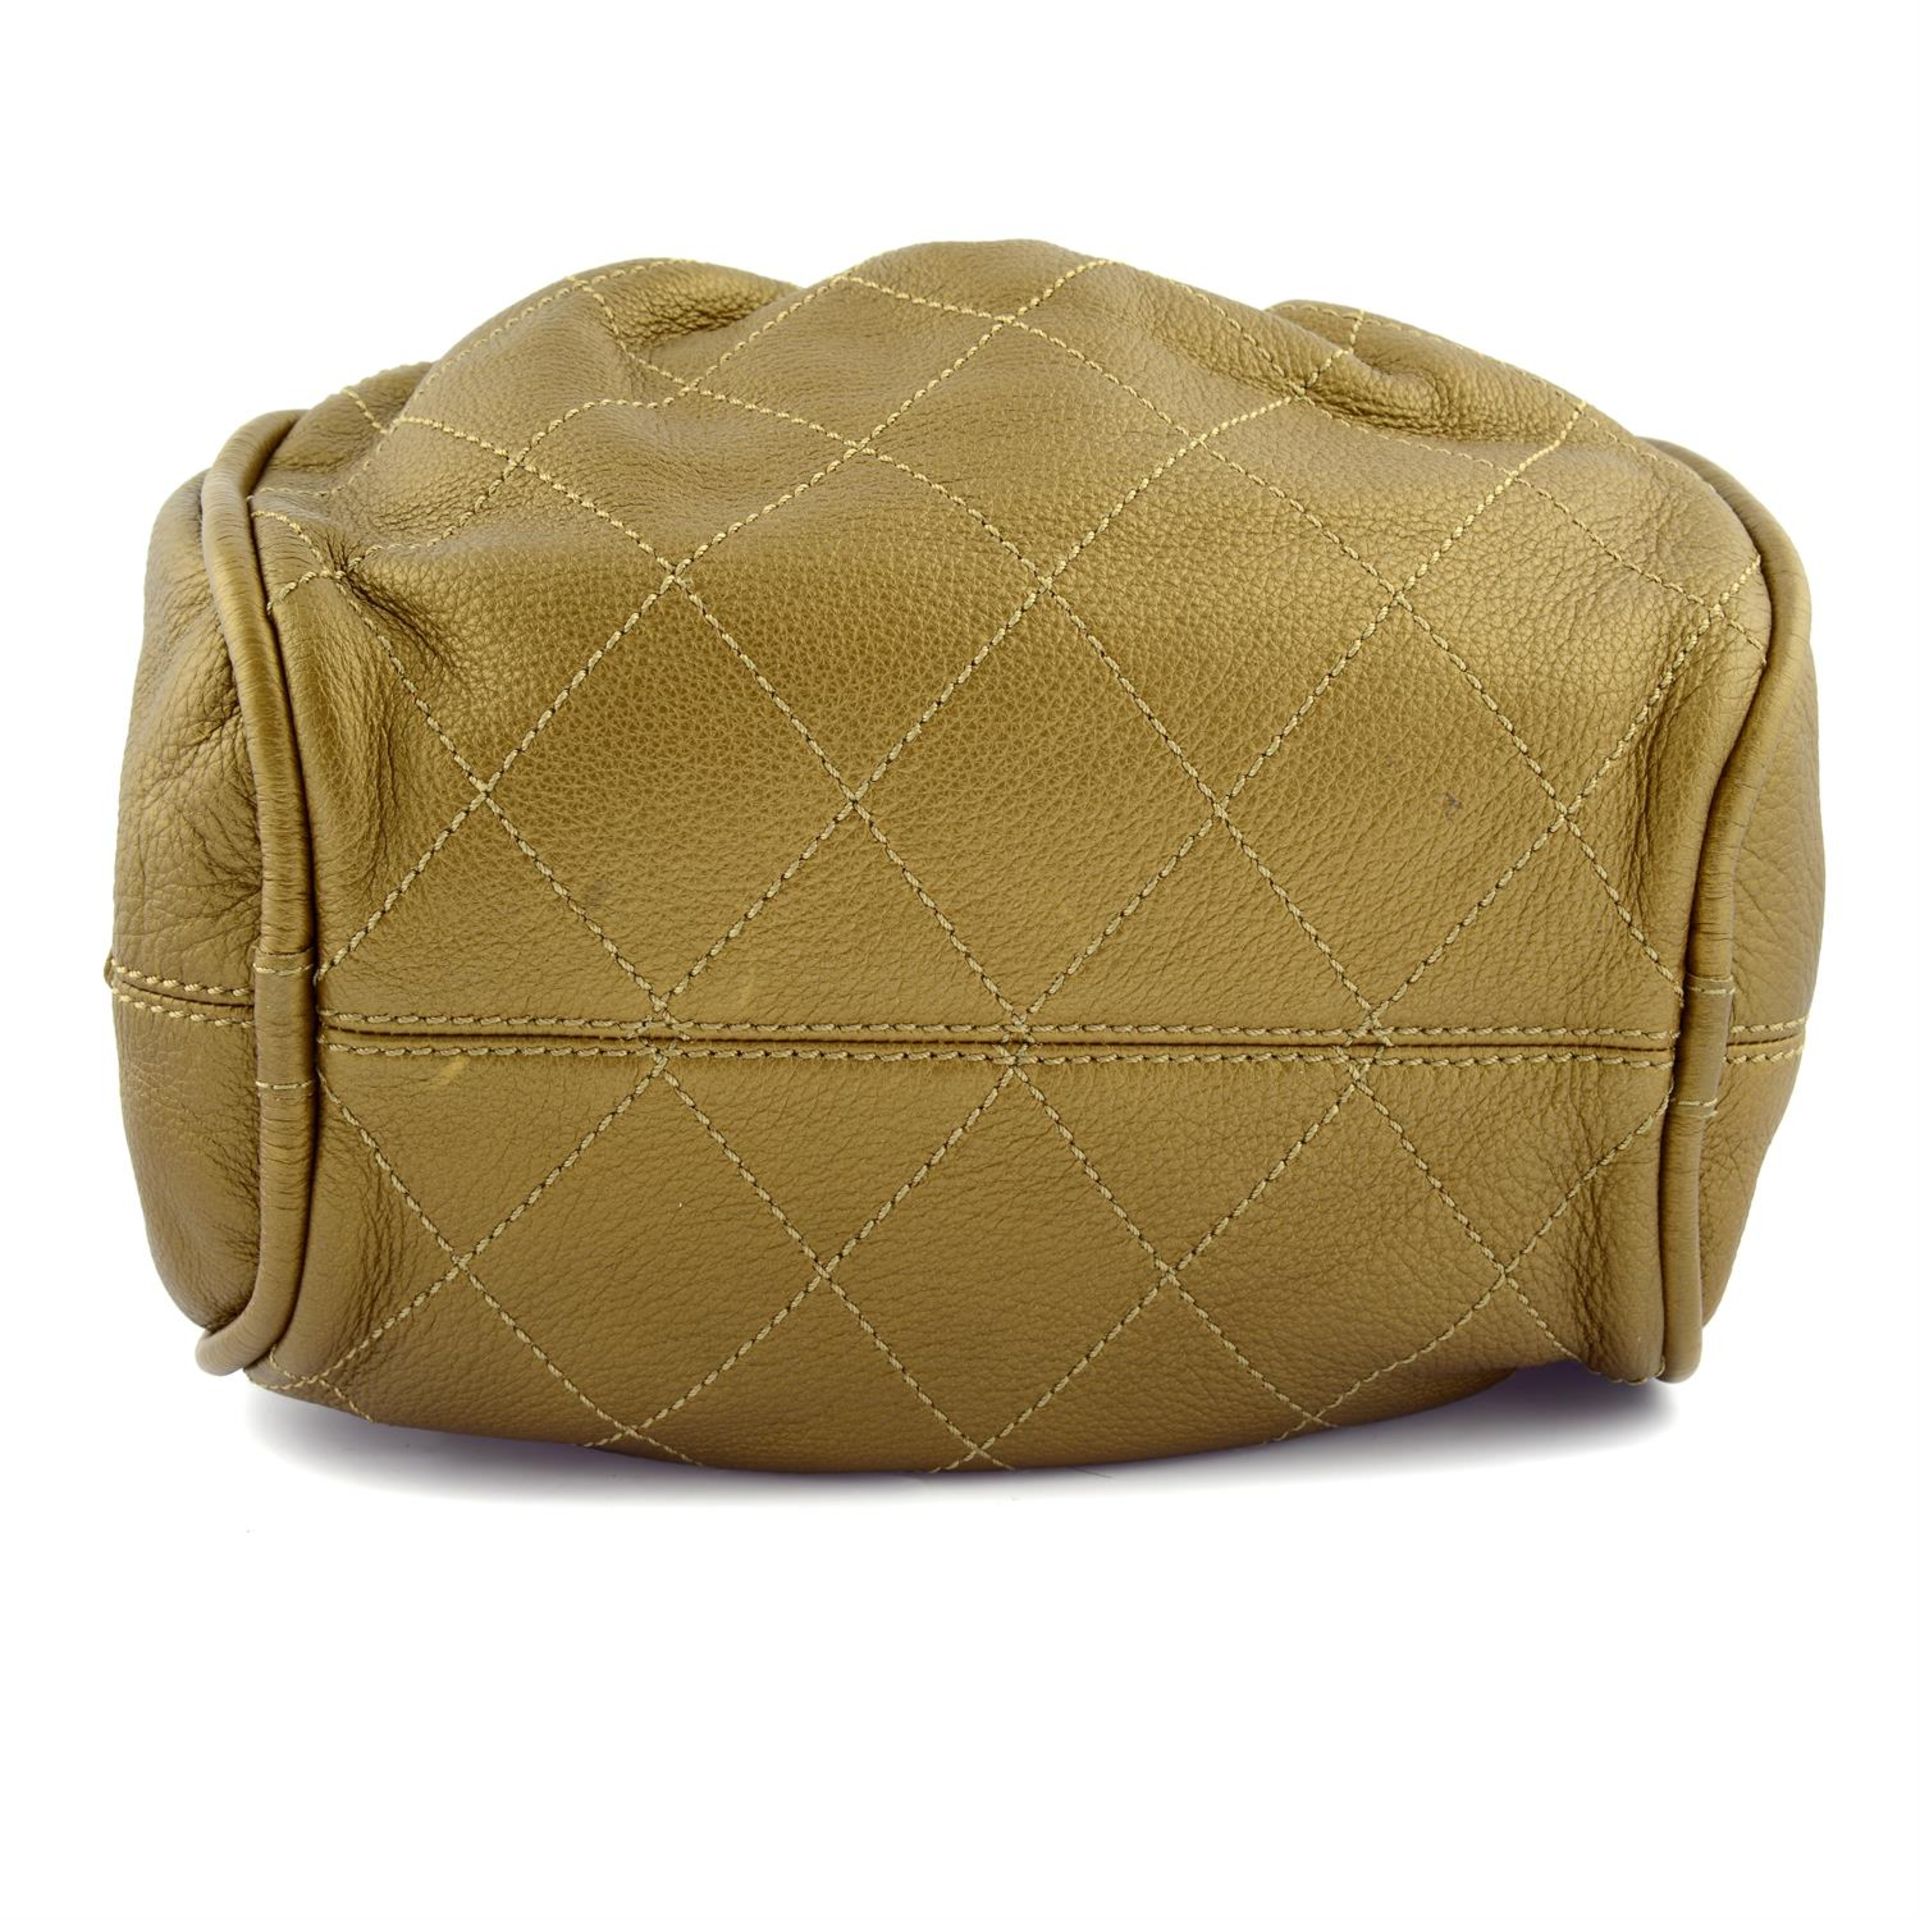 CHANEL - a gold-tone leather handbag. - Image 5 of 5